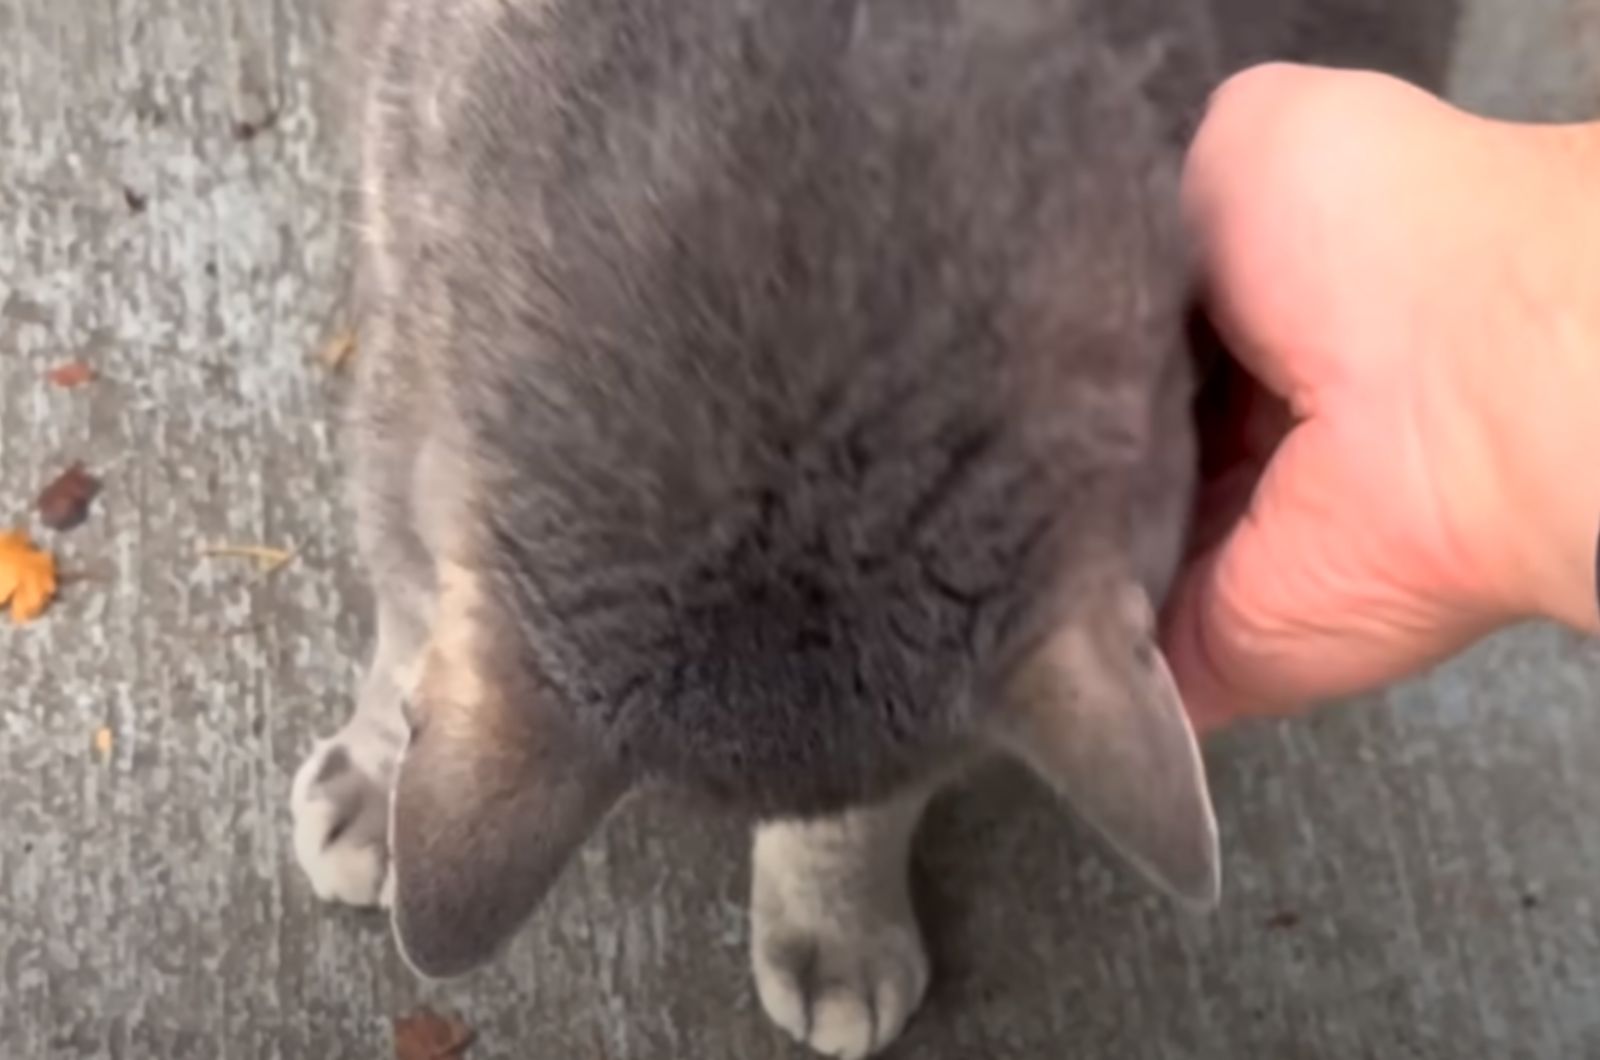 hand touching the cat